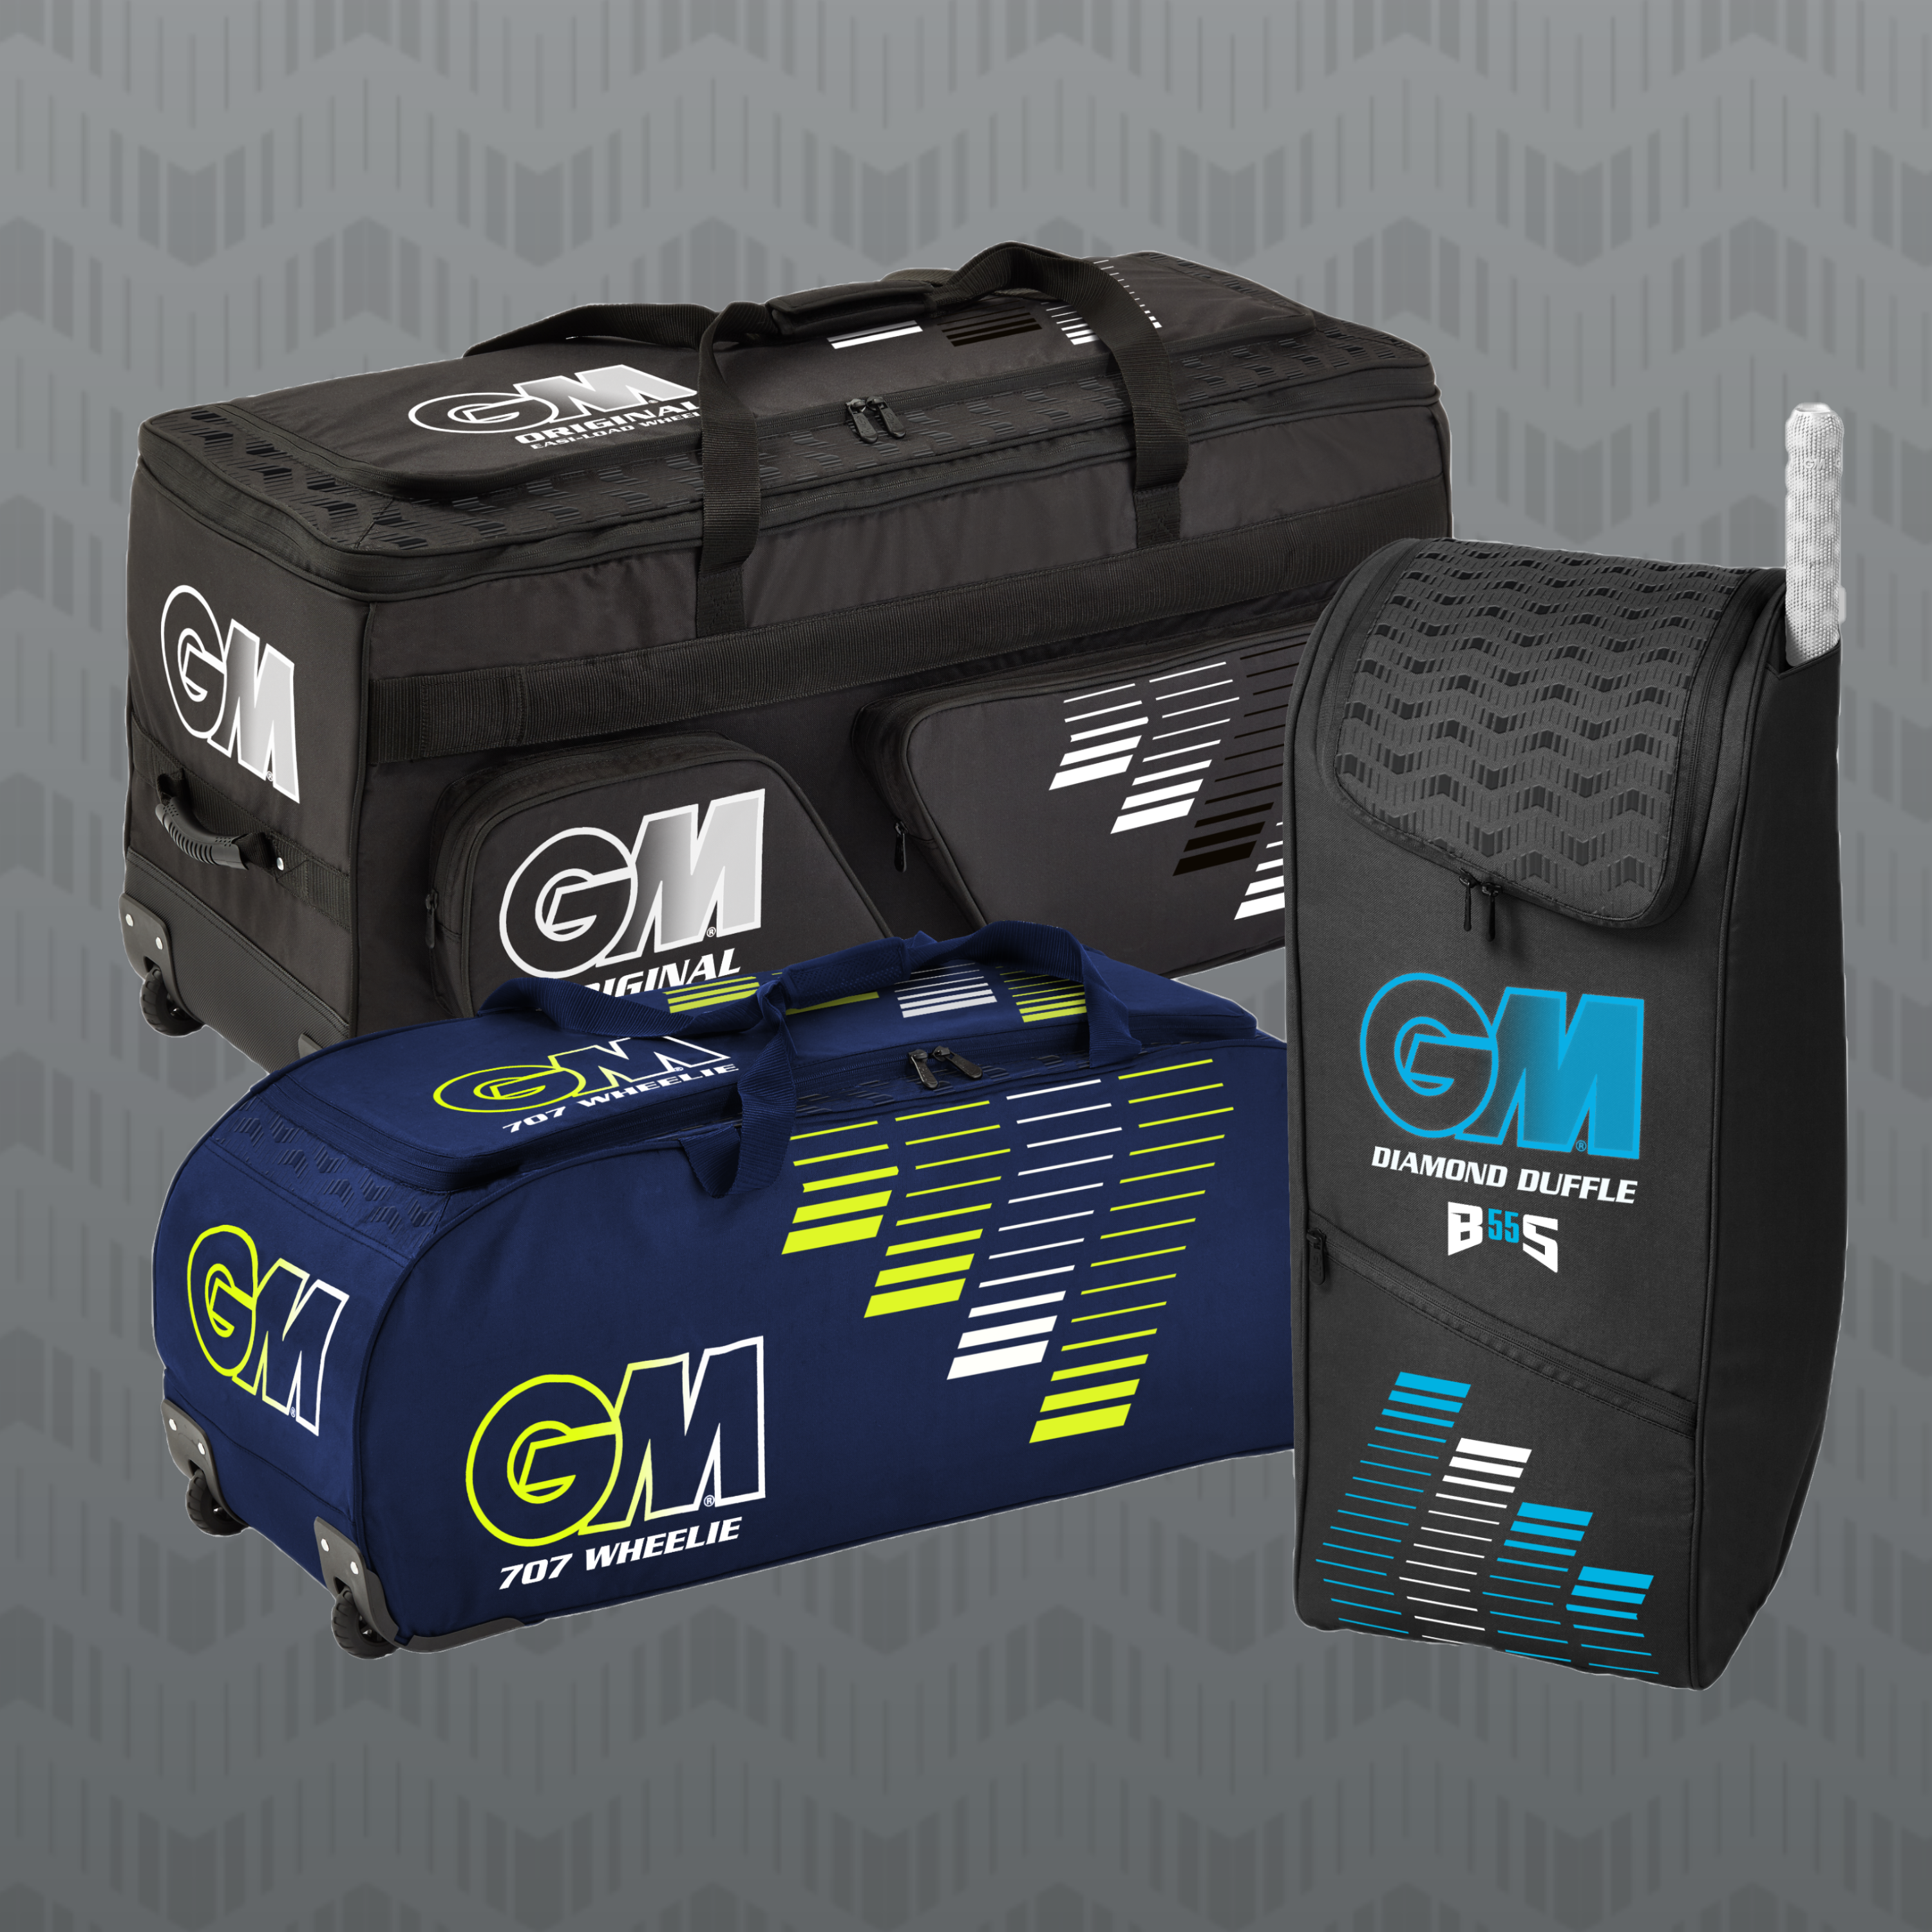 Grays G75 Navy Mint Hockey Stick and Kit Bag